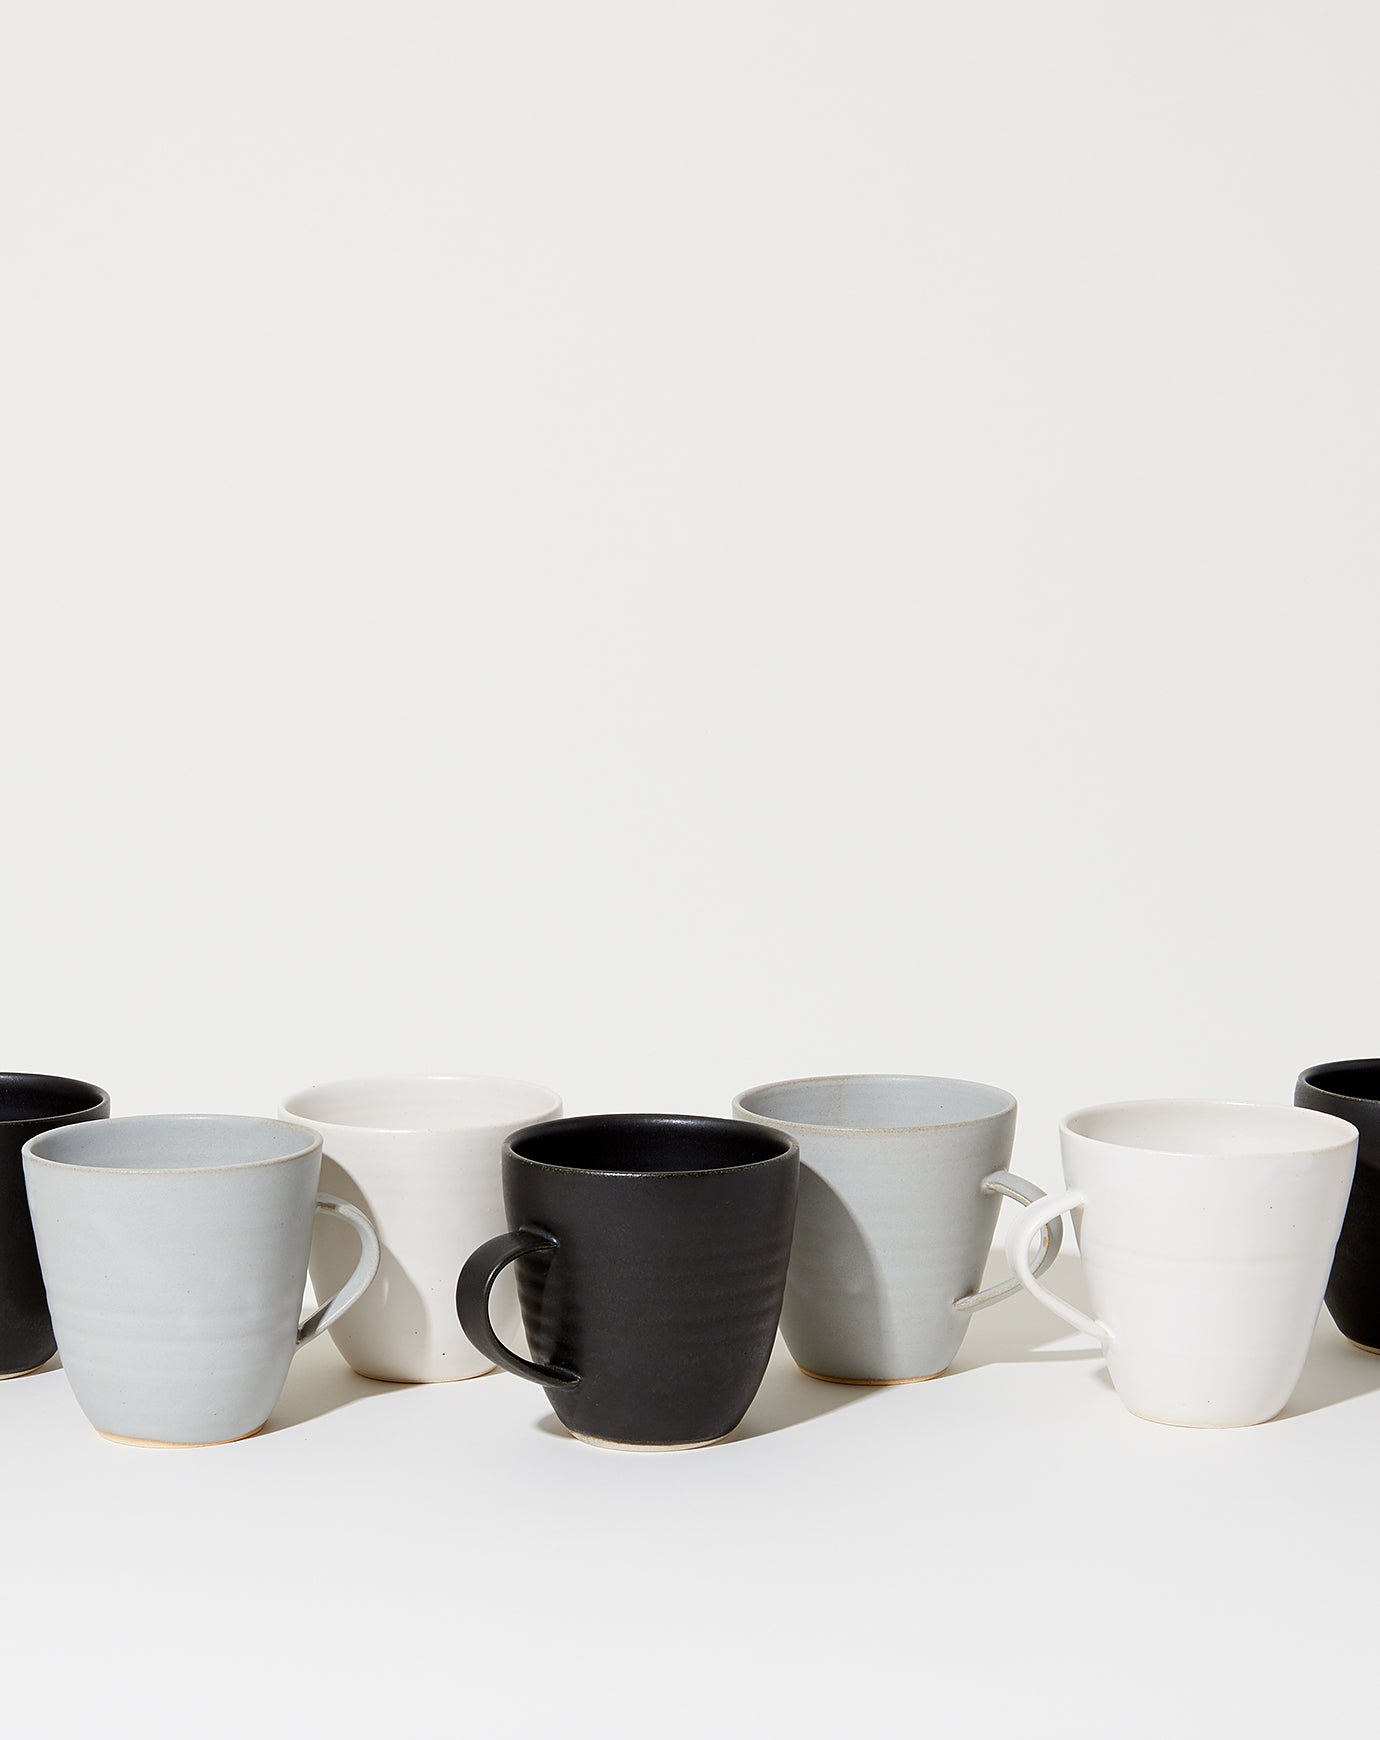 Sherldon Ceramics Farmhouse Coffee Mug in Satin Black